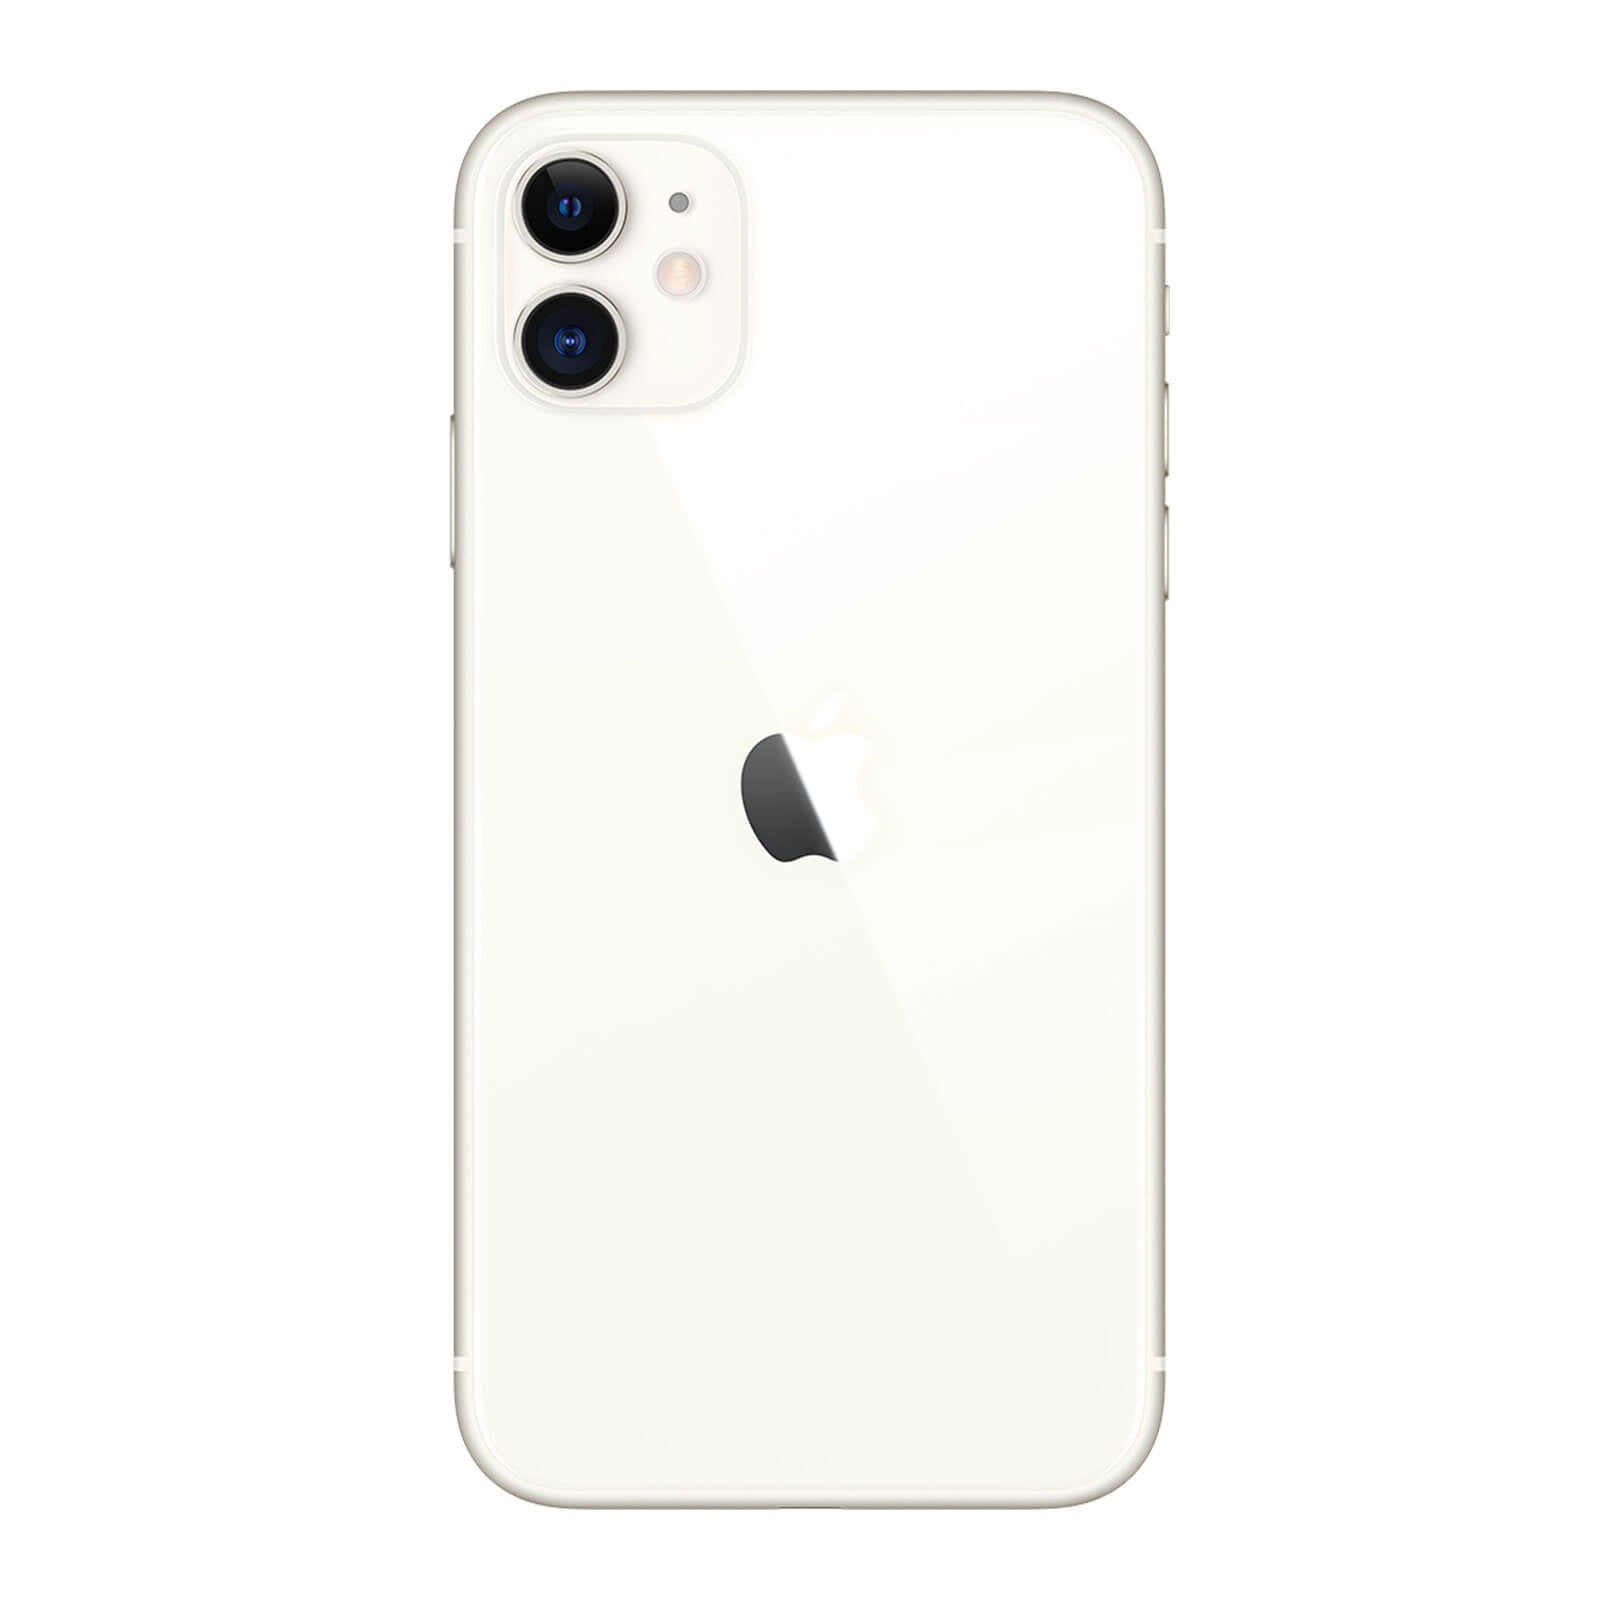 Apple iPhone 11 64GB White Very Good - Unlocked - Unlocked